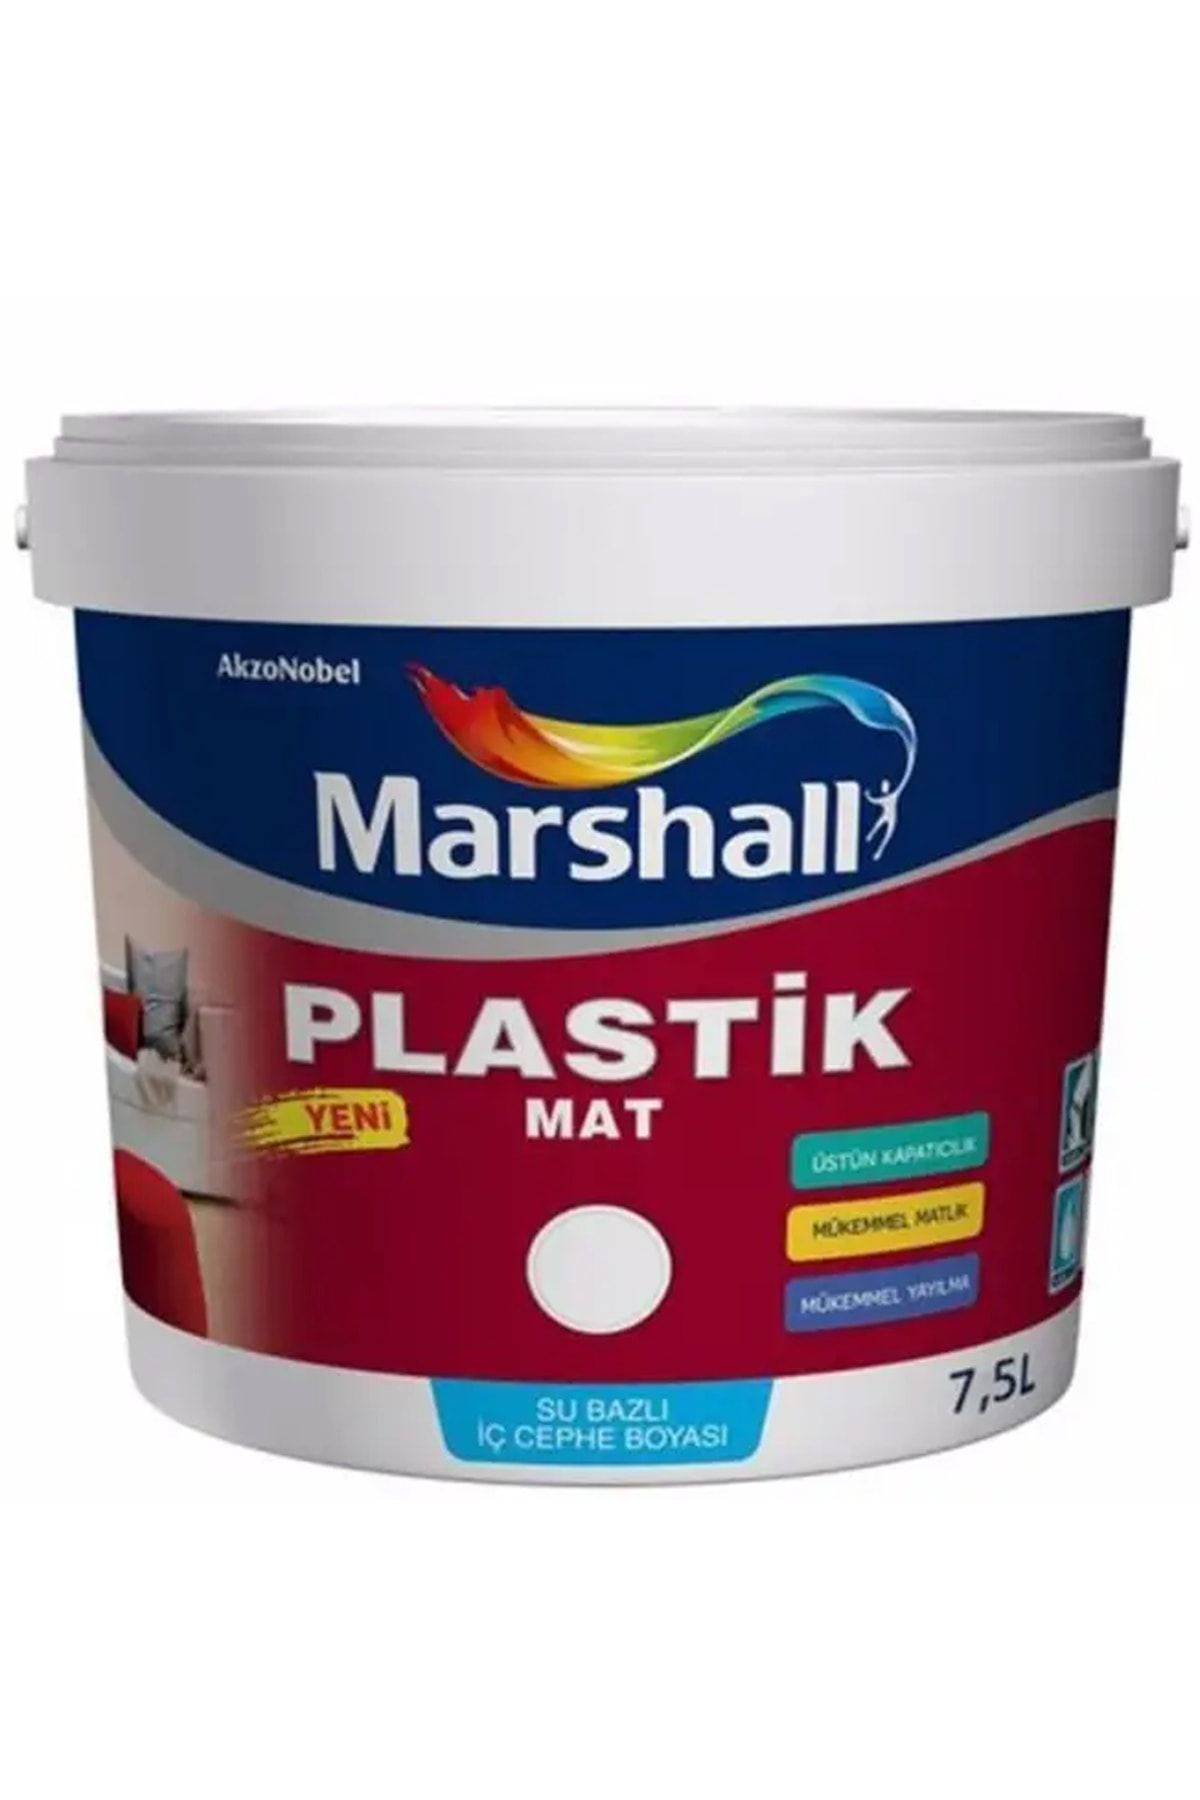 Marshall Plastik Mat Silinebilir Iç Cephe Boyası Serap 7,5 Lt (10 Kg)